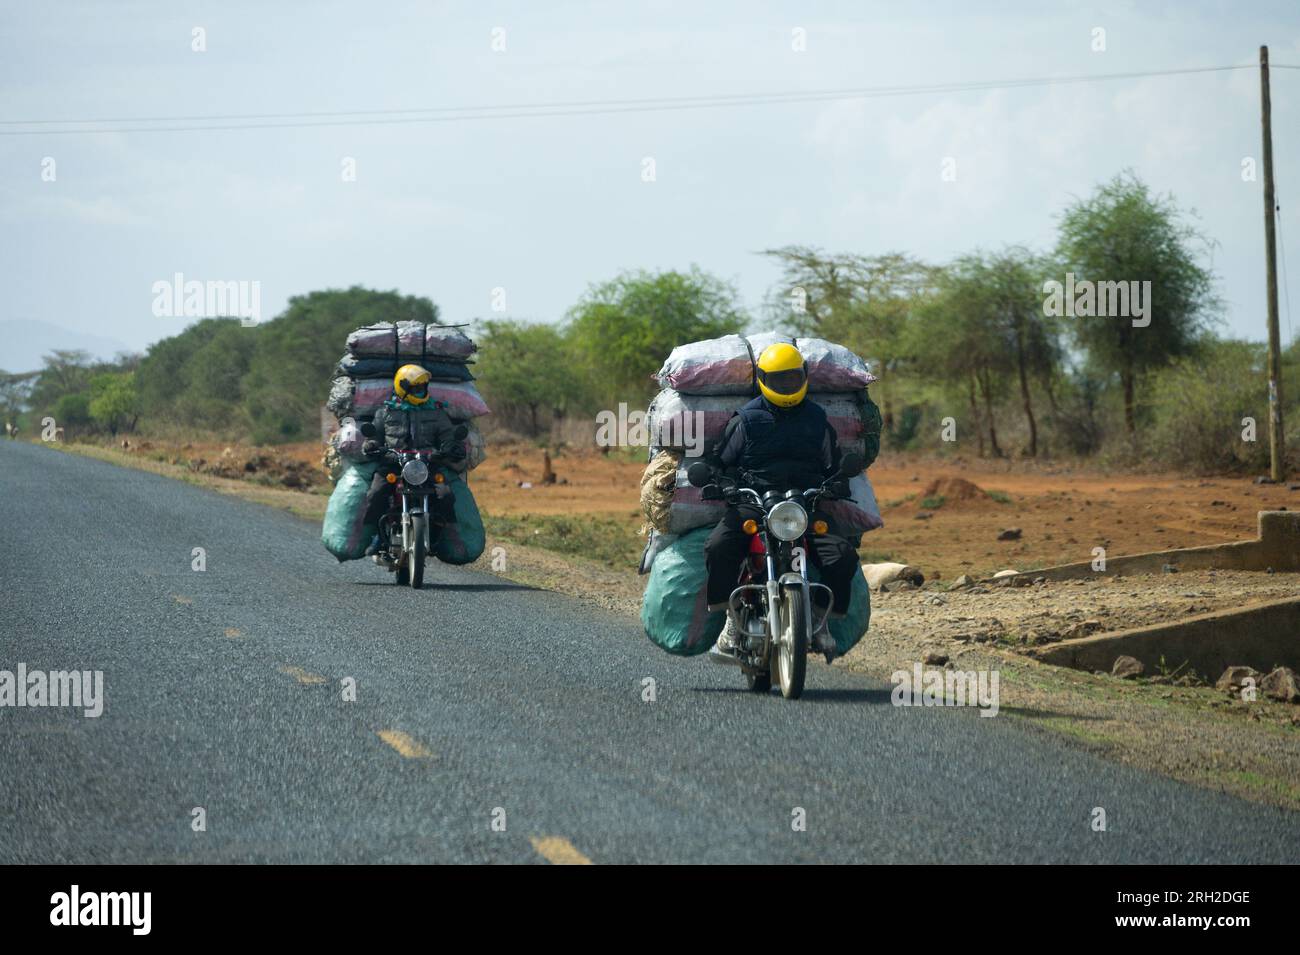 Two boda boda motorbike riders carrying sacks of charcoal on the back of their motorcycles, Nakuru, Kenya, East Africa Stock Photo